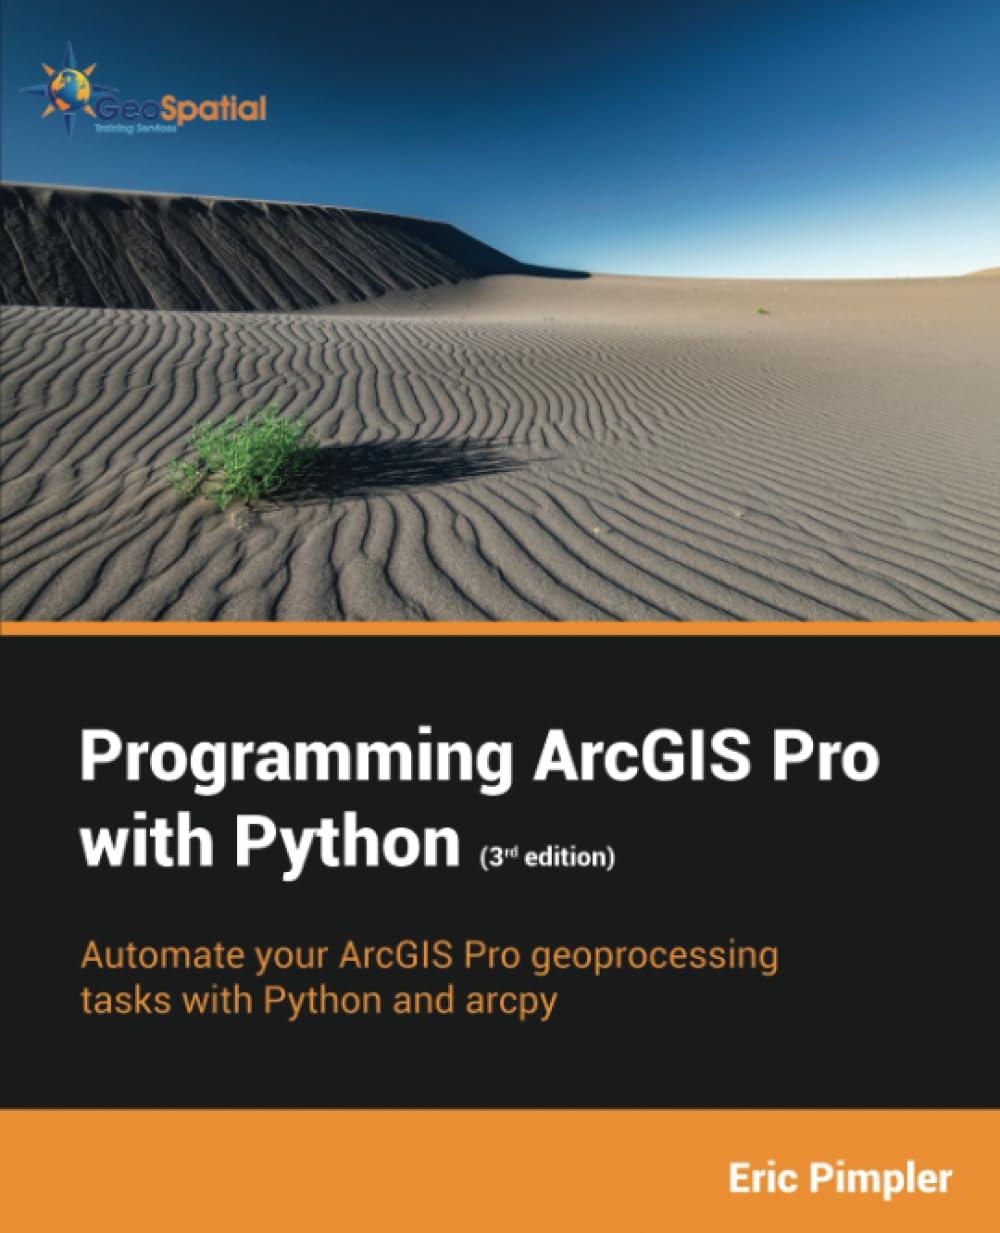 programming arcgis pro with python 3rd edition eric pimpler b0c9sdls8m, 979-8851913105